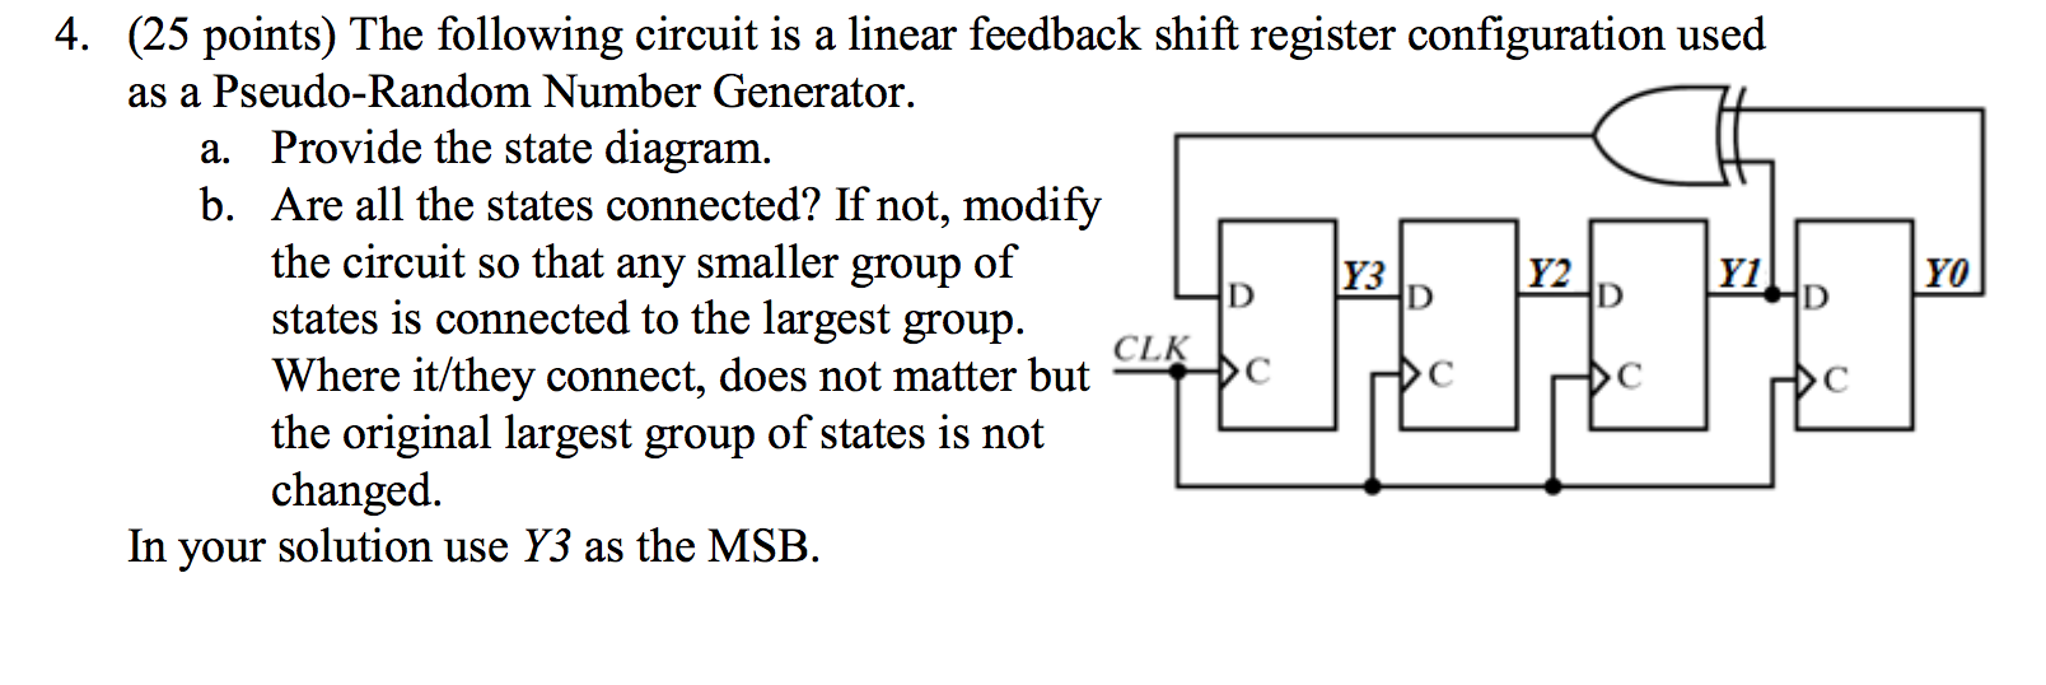 decrypt linear feedback shift register